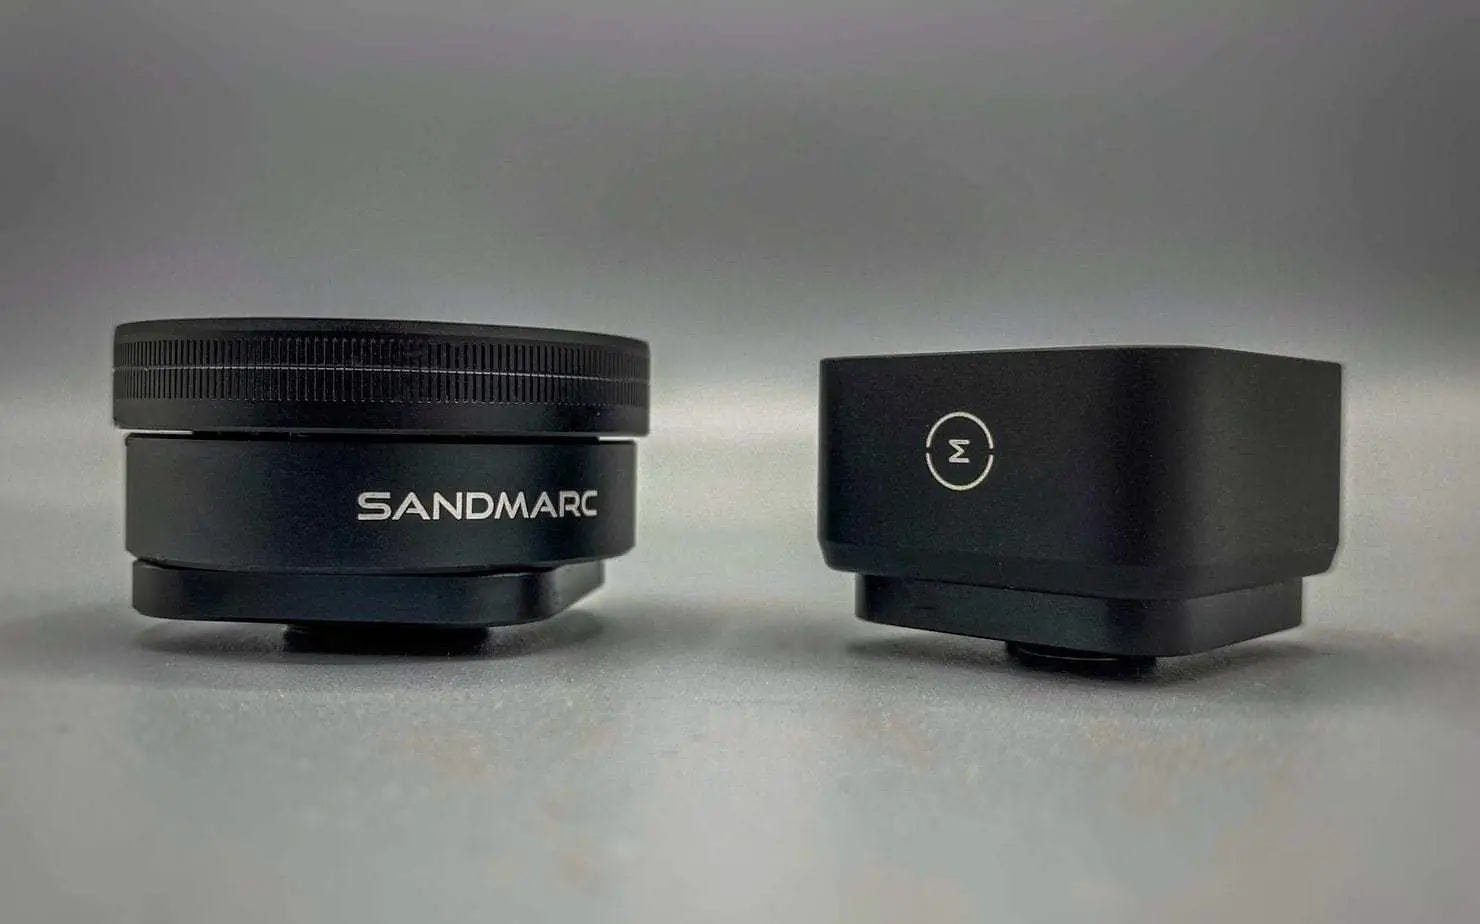 Sandmarc Anamorphic Lens vs Moment Anamorphic Lens